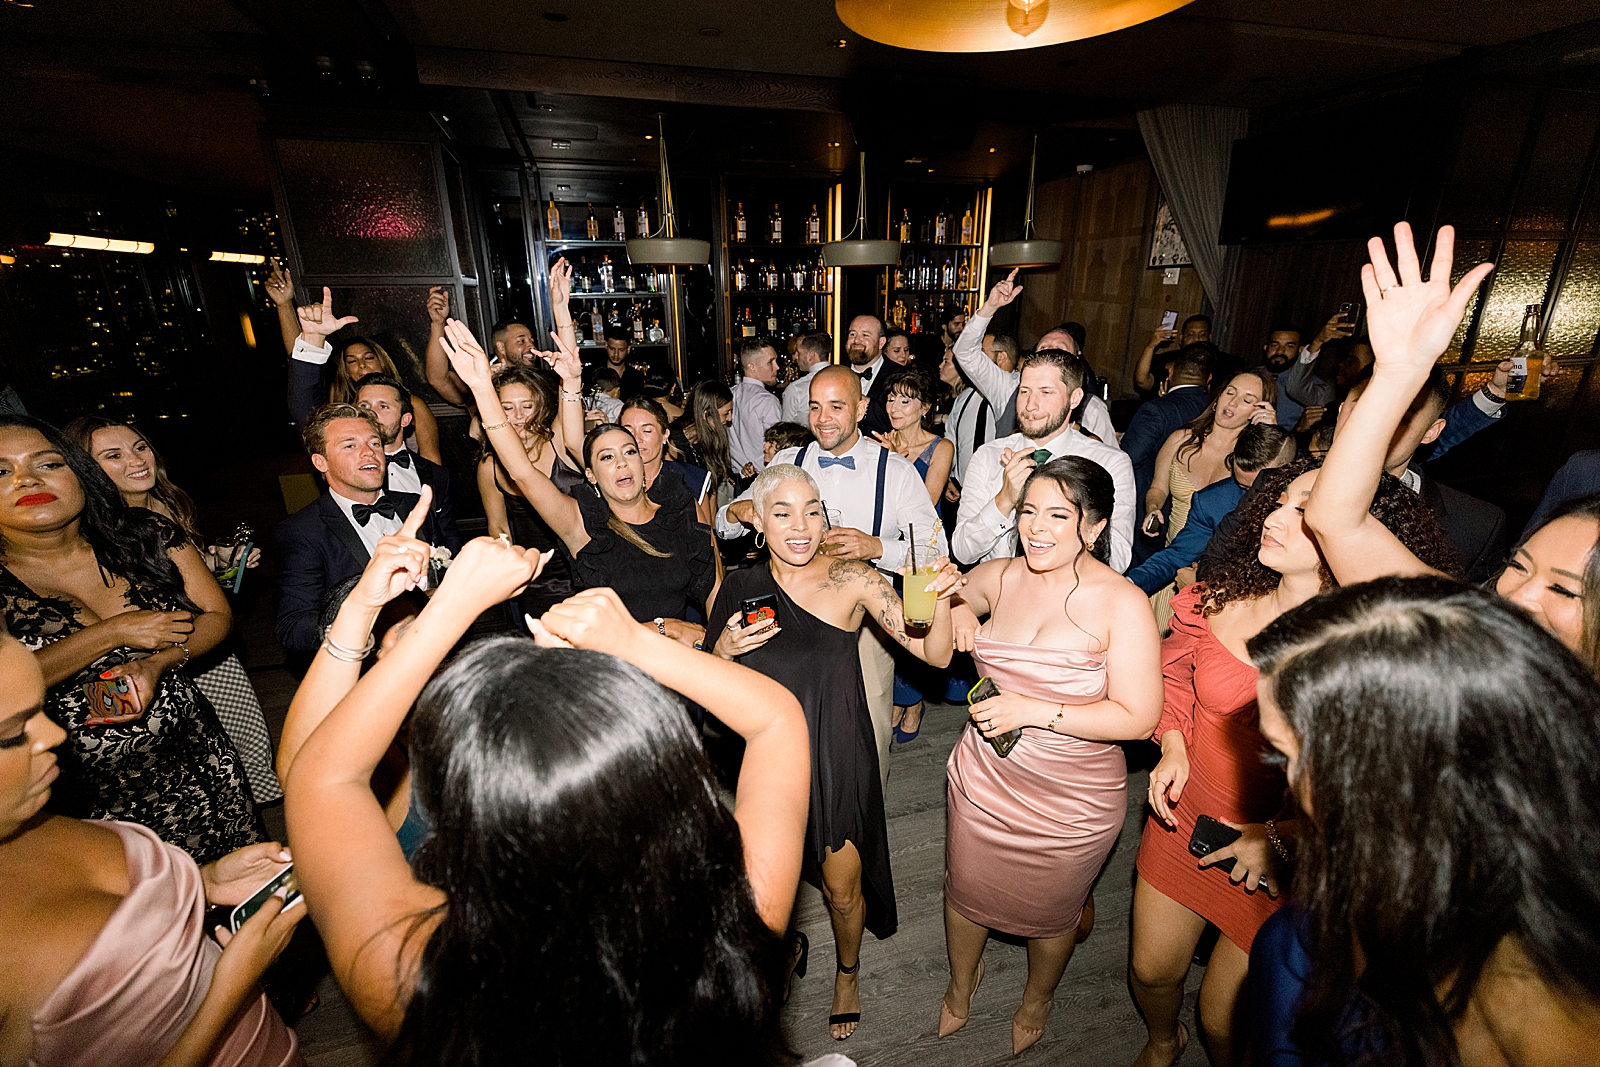 Guests dancing at wedding Reception at nighttime rooftop bar